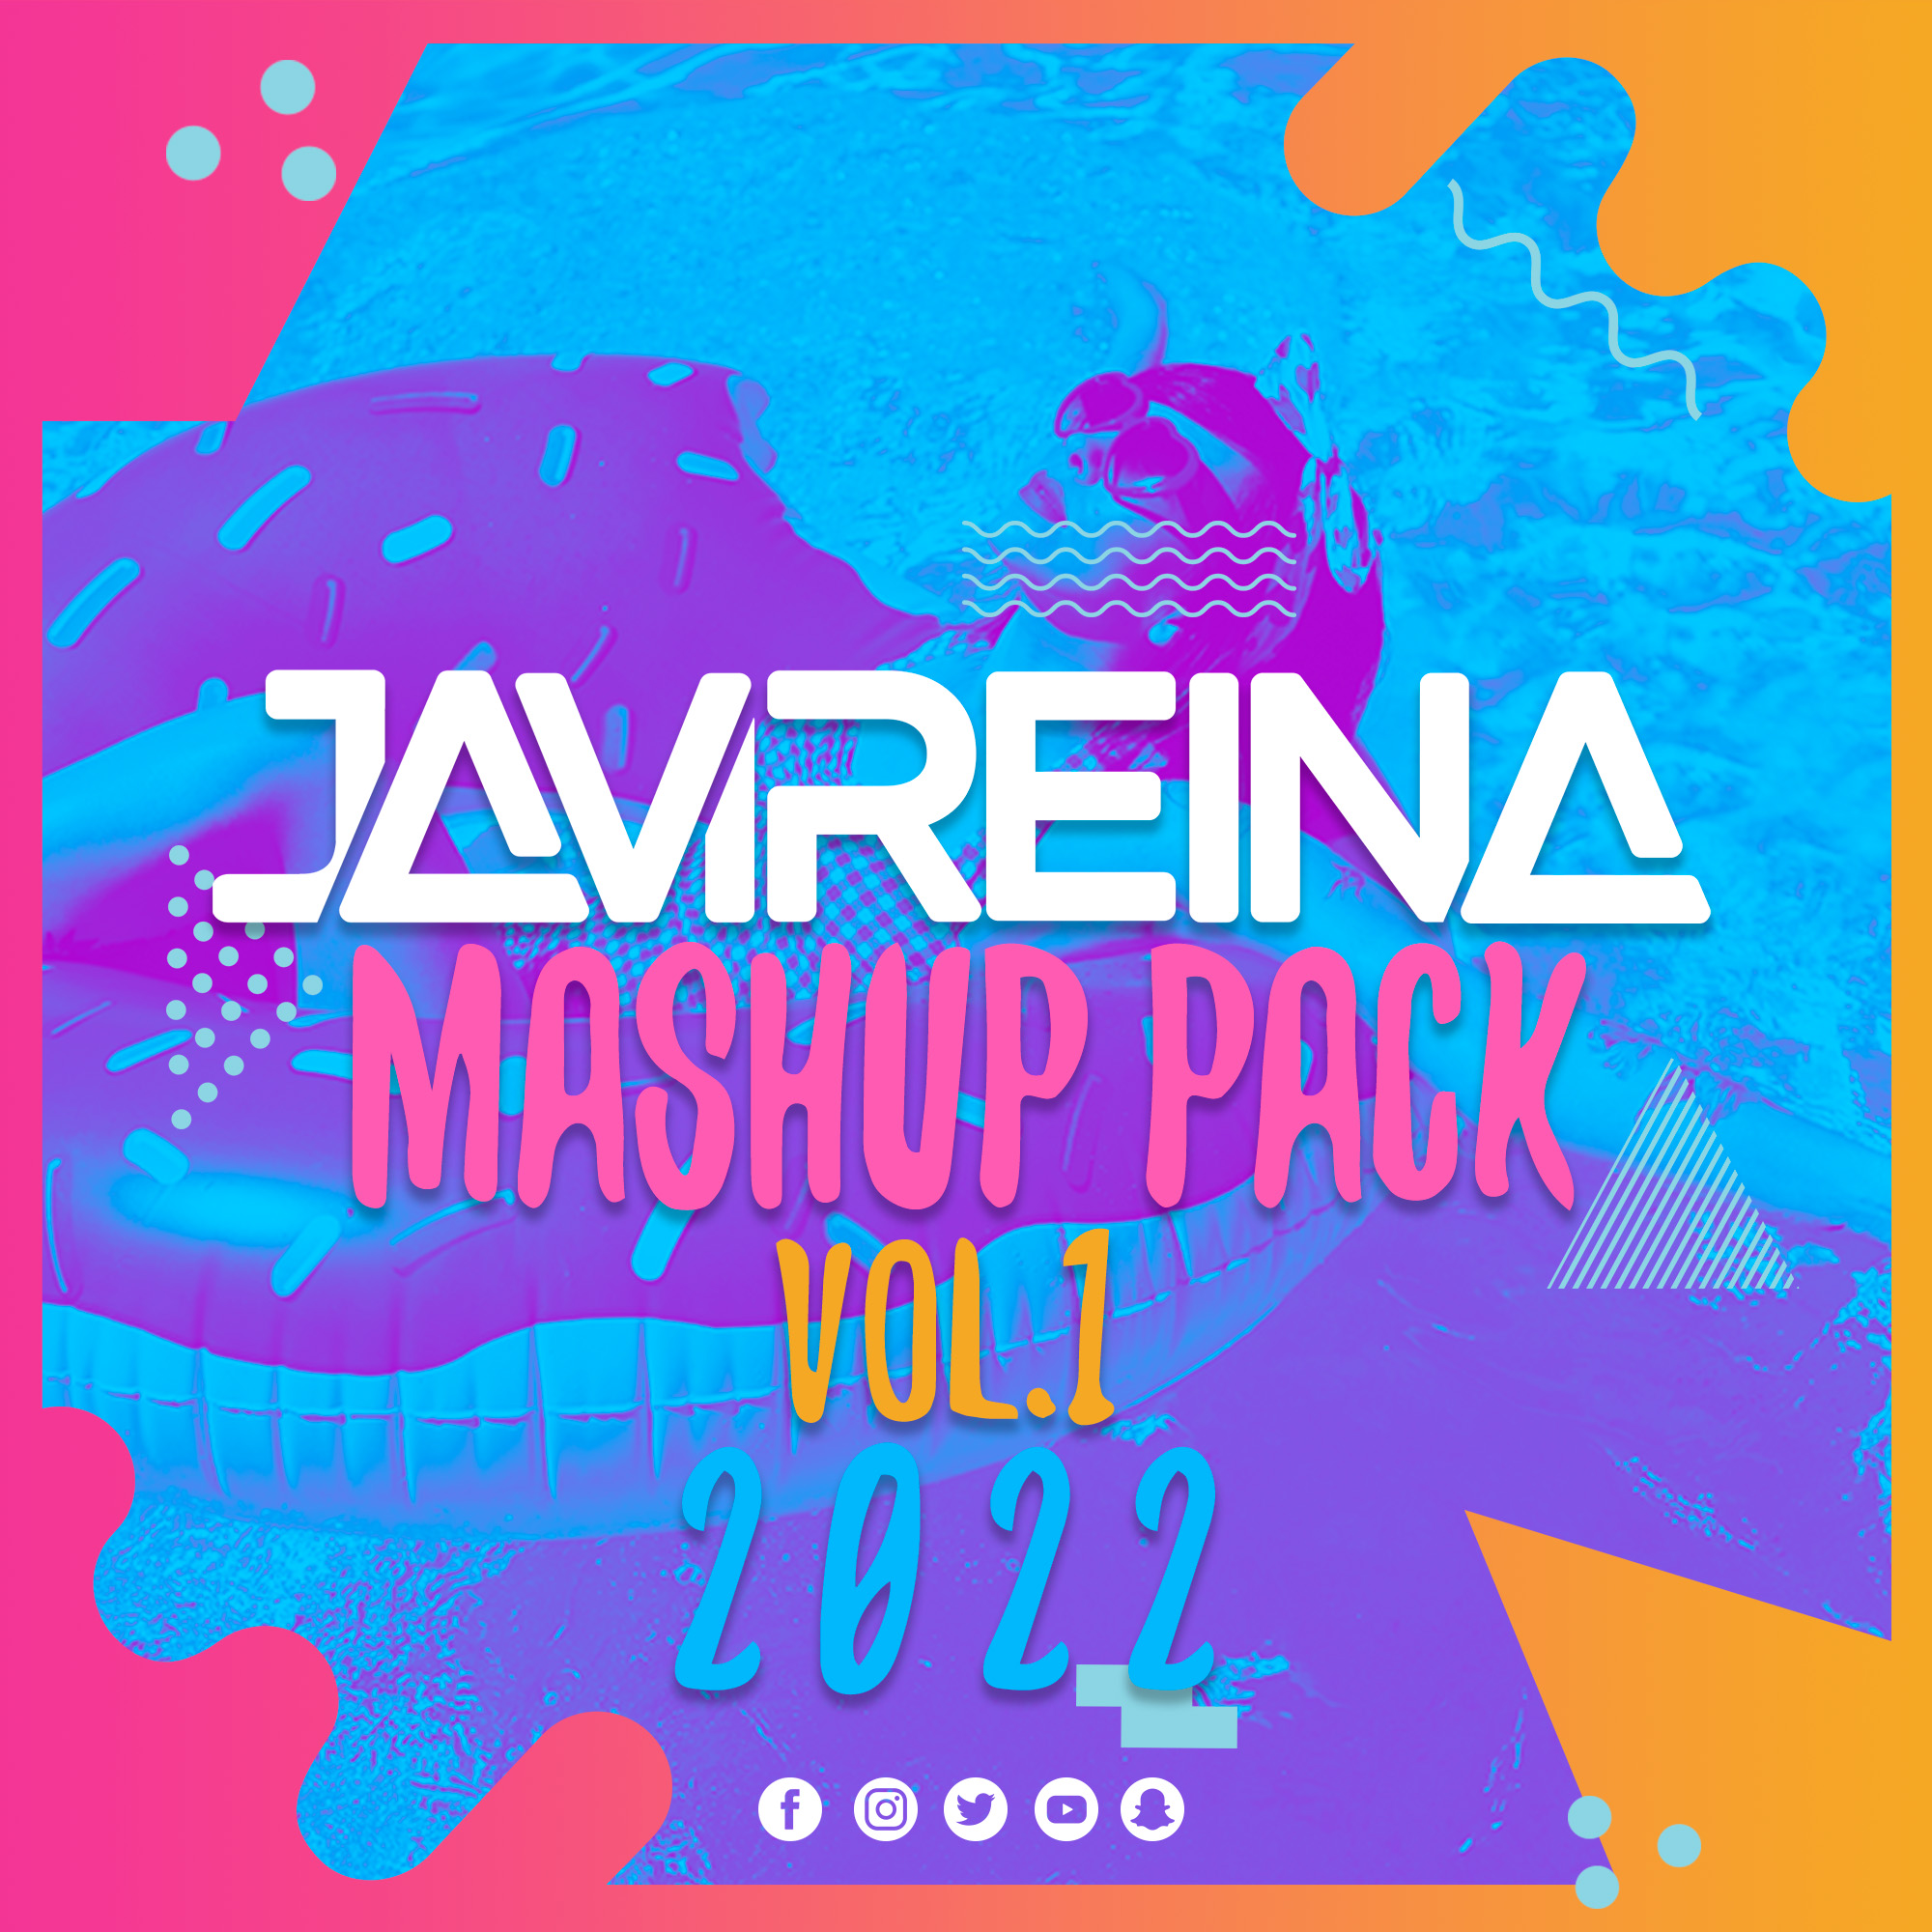 Javi Reina Mashup Pack 2022 Volume 1